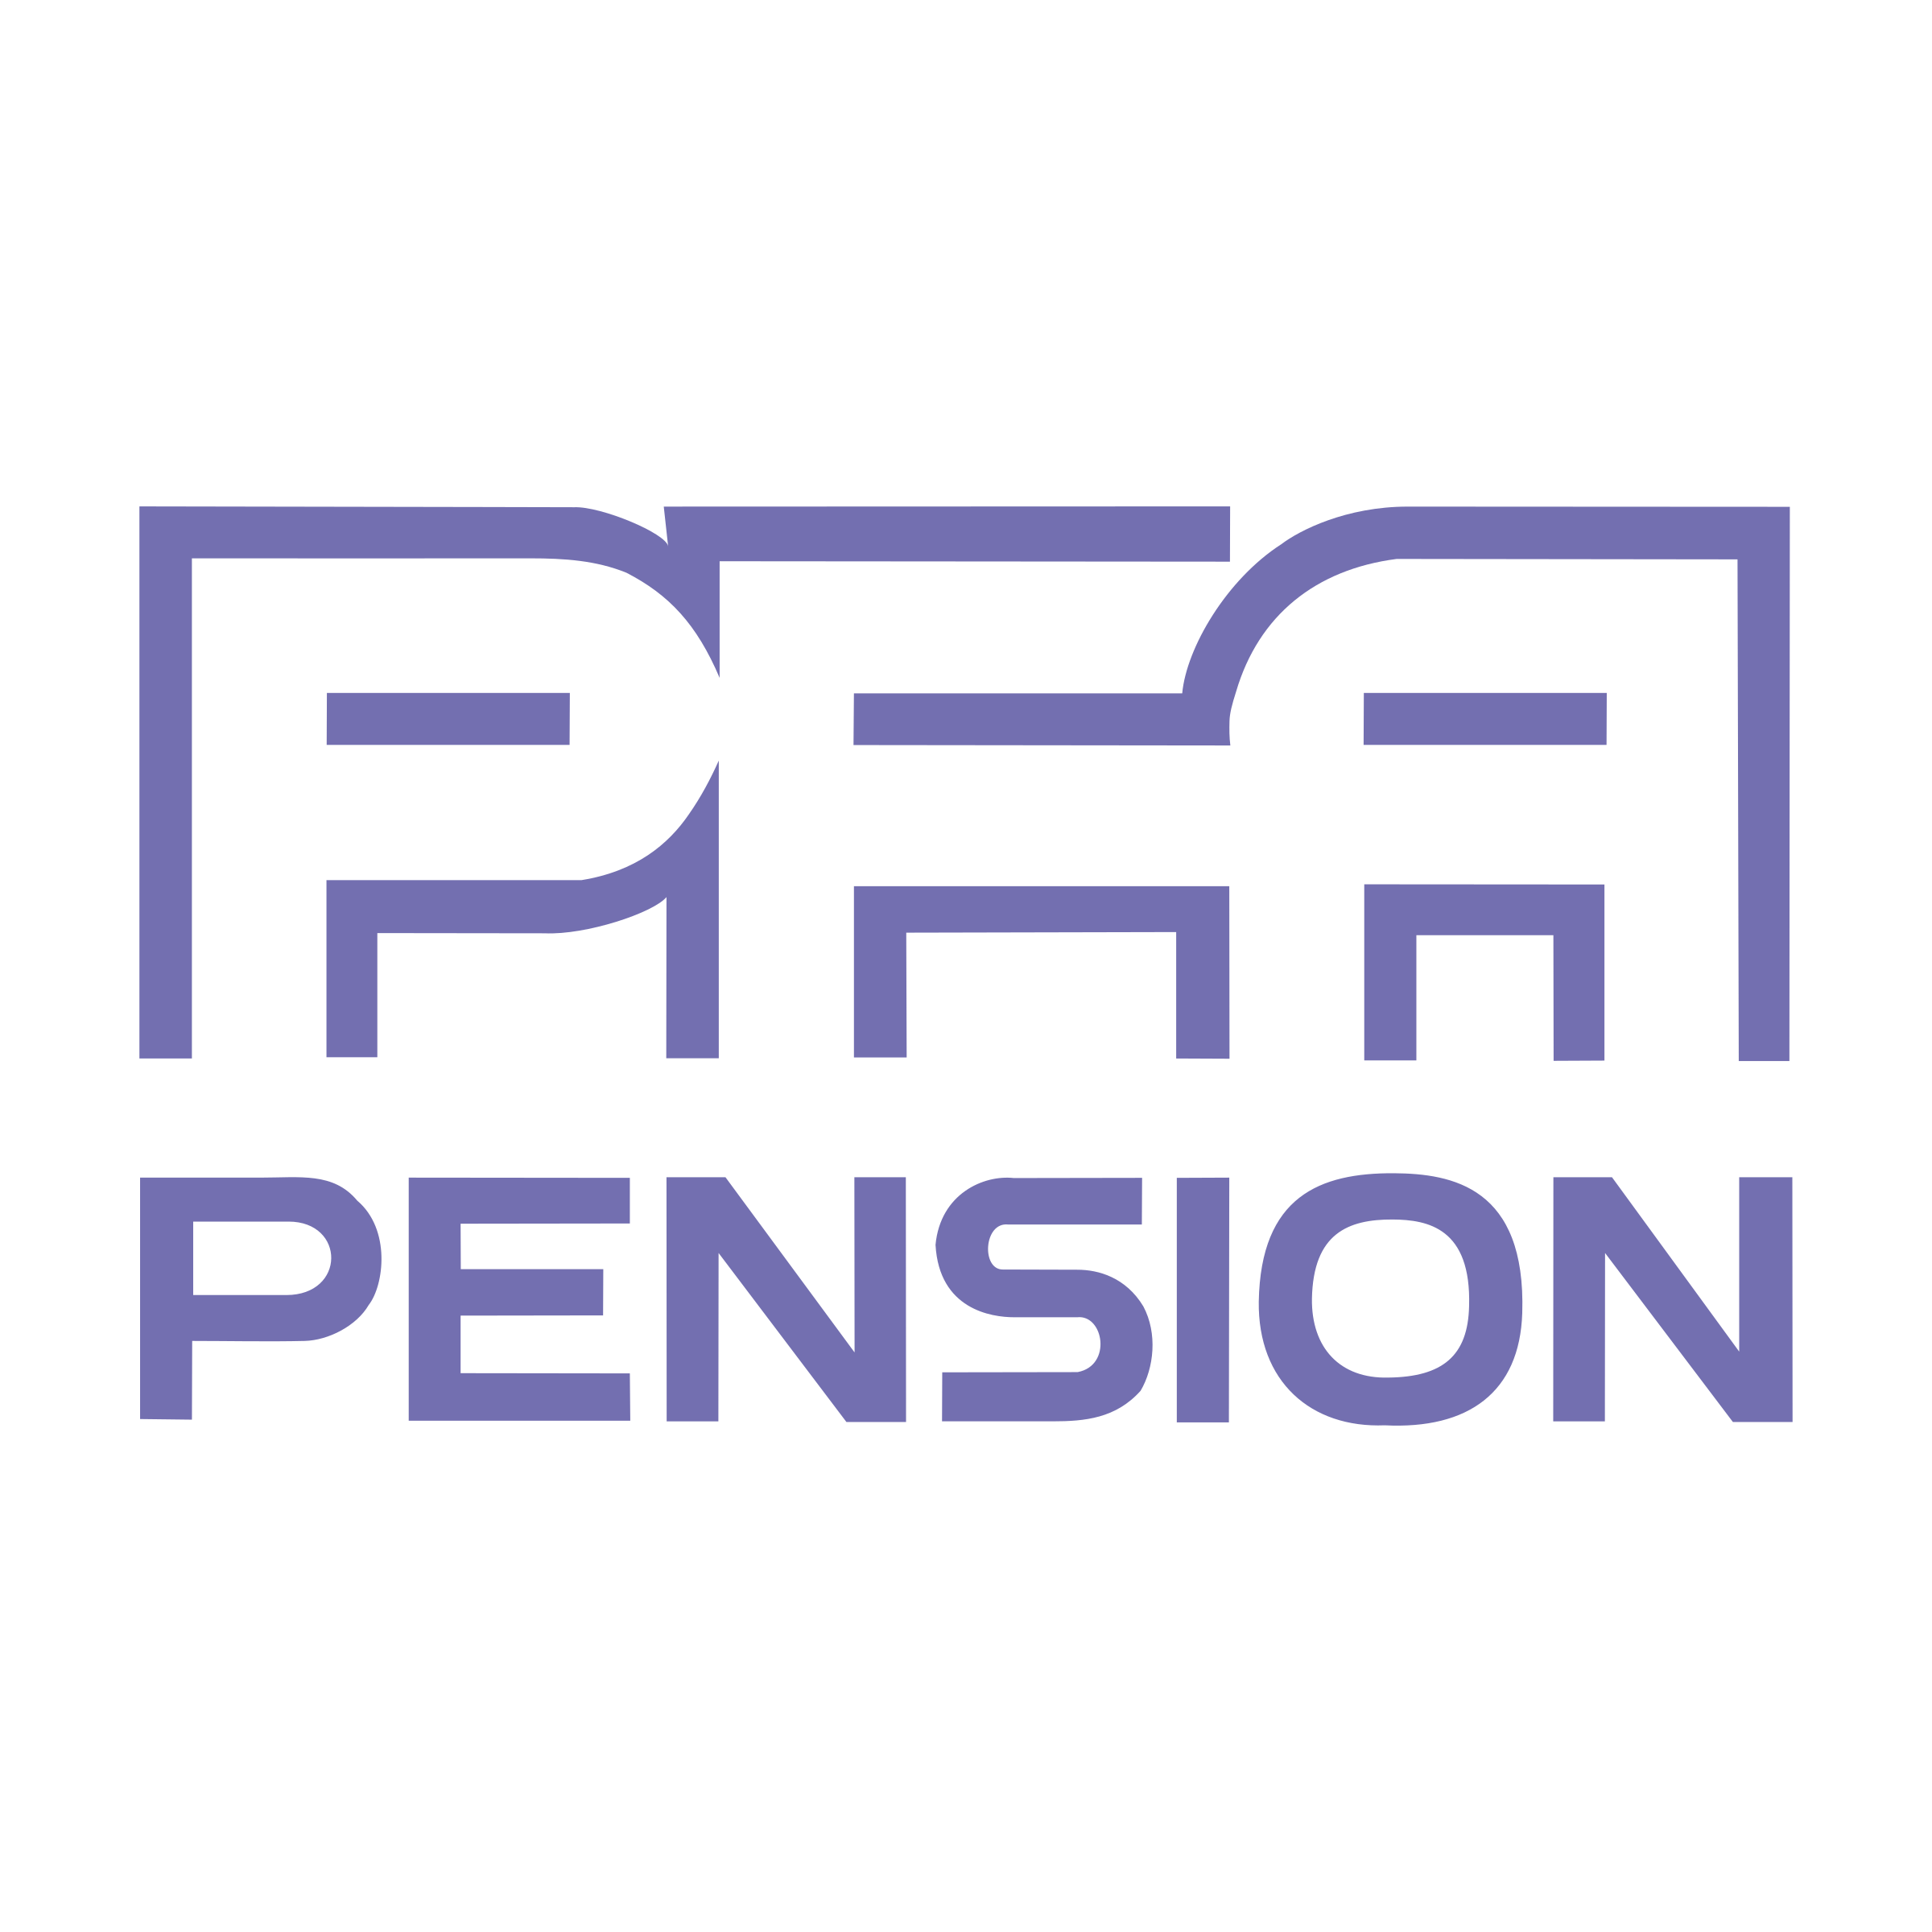 PFA Logo - PFA Pension Logo PNG Transparent & SVG Vector - Freebie Supply